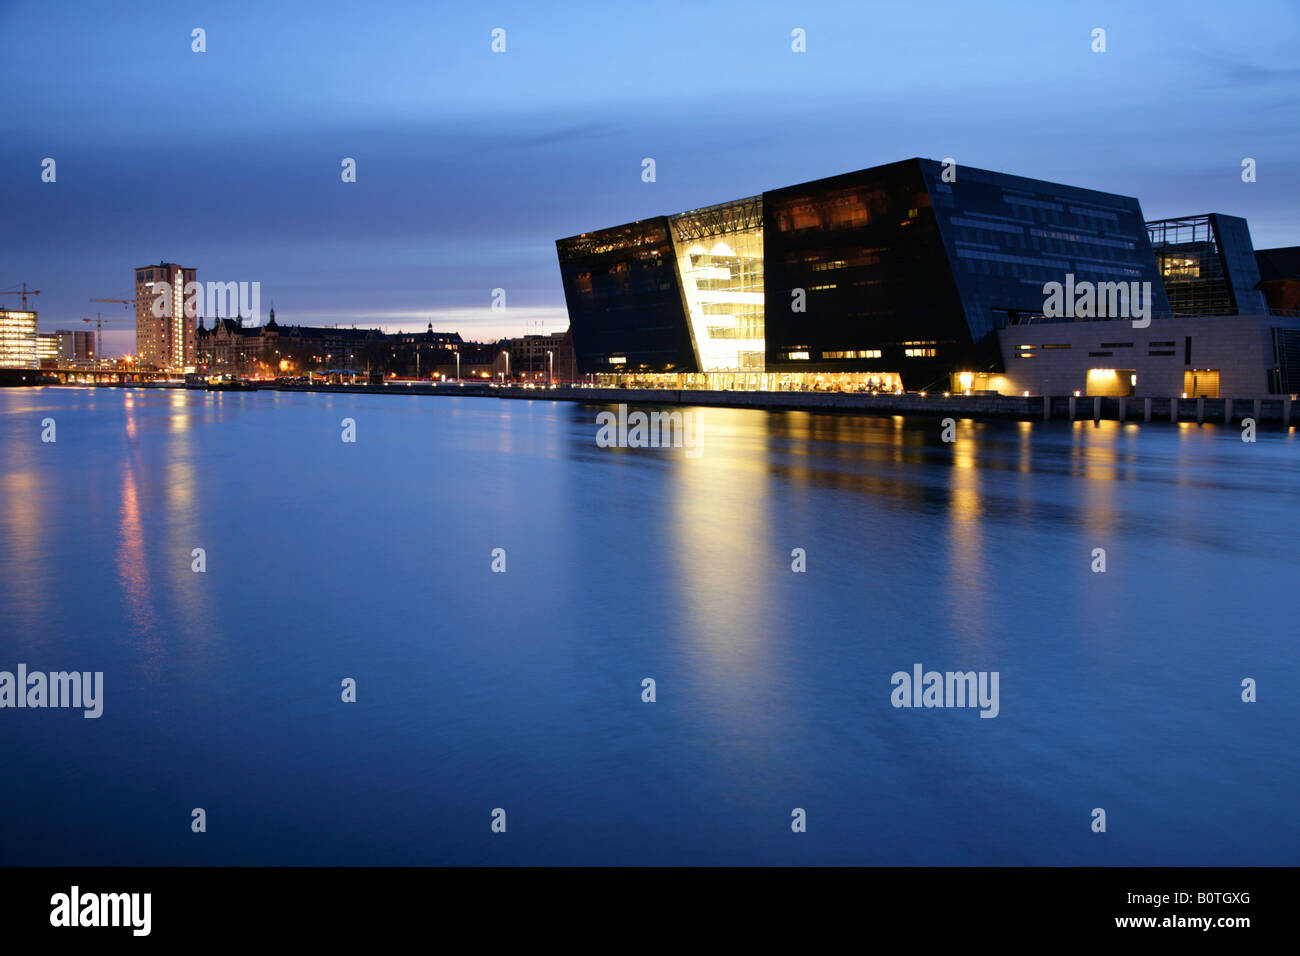 Vista notturna della moderna estensione alla Kongelige Bibliotek o Royal Library, o diamante nero, Copenhagen, Danimarca. Foto Stock